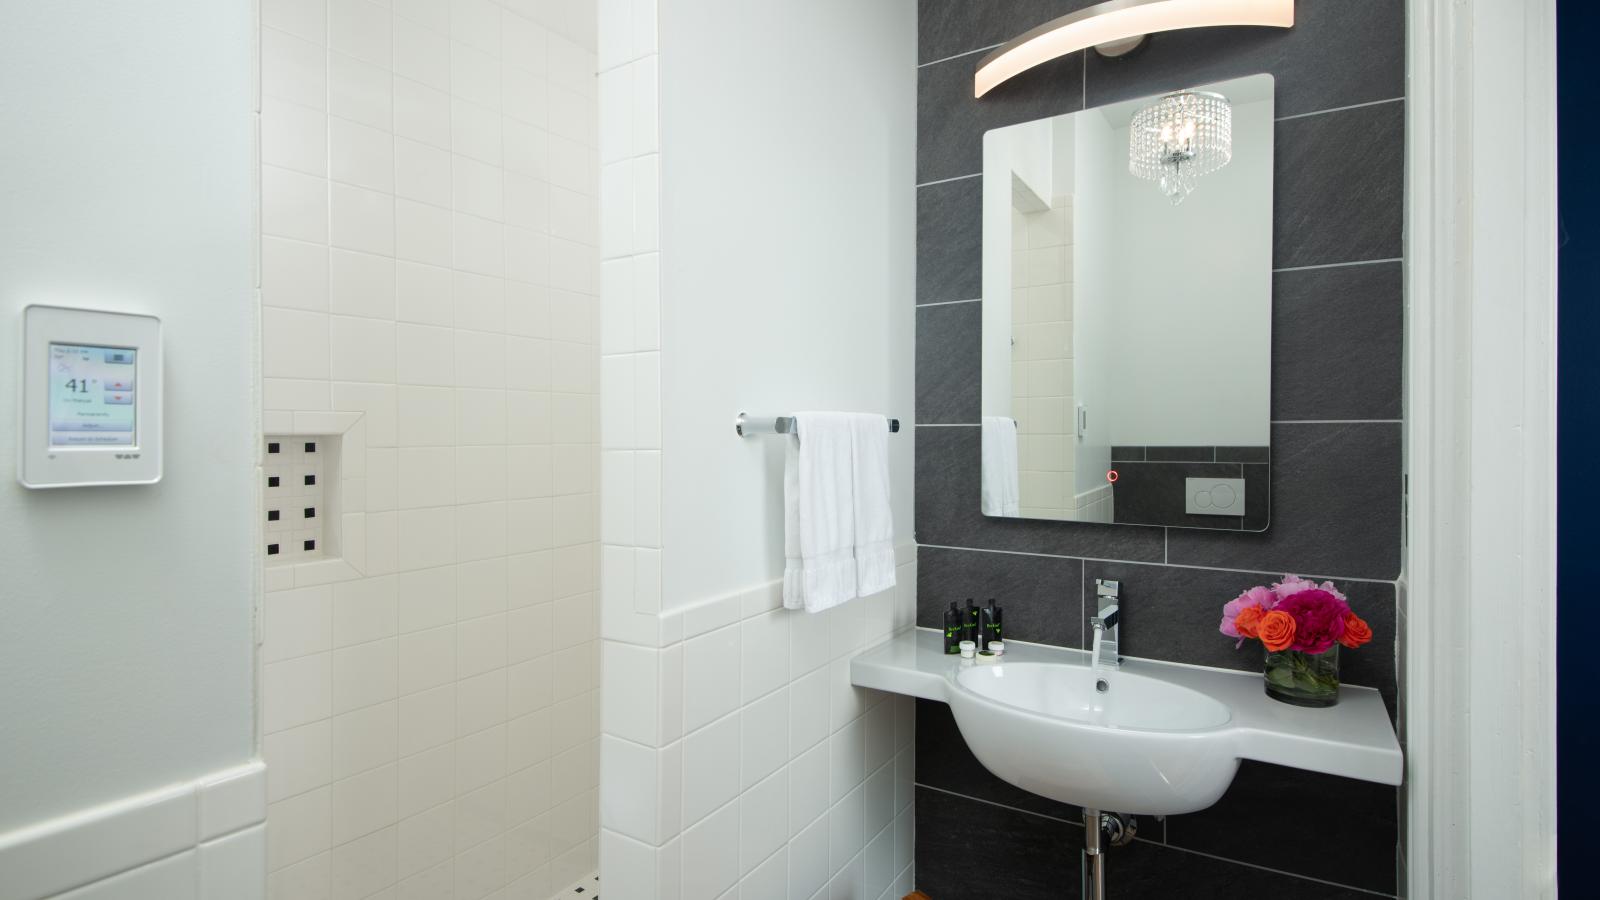 The Mariner New european toilet, shower, bath, vanity and heated floors